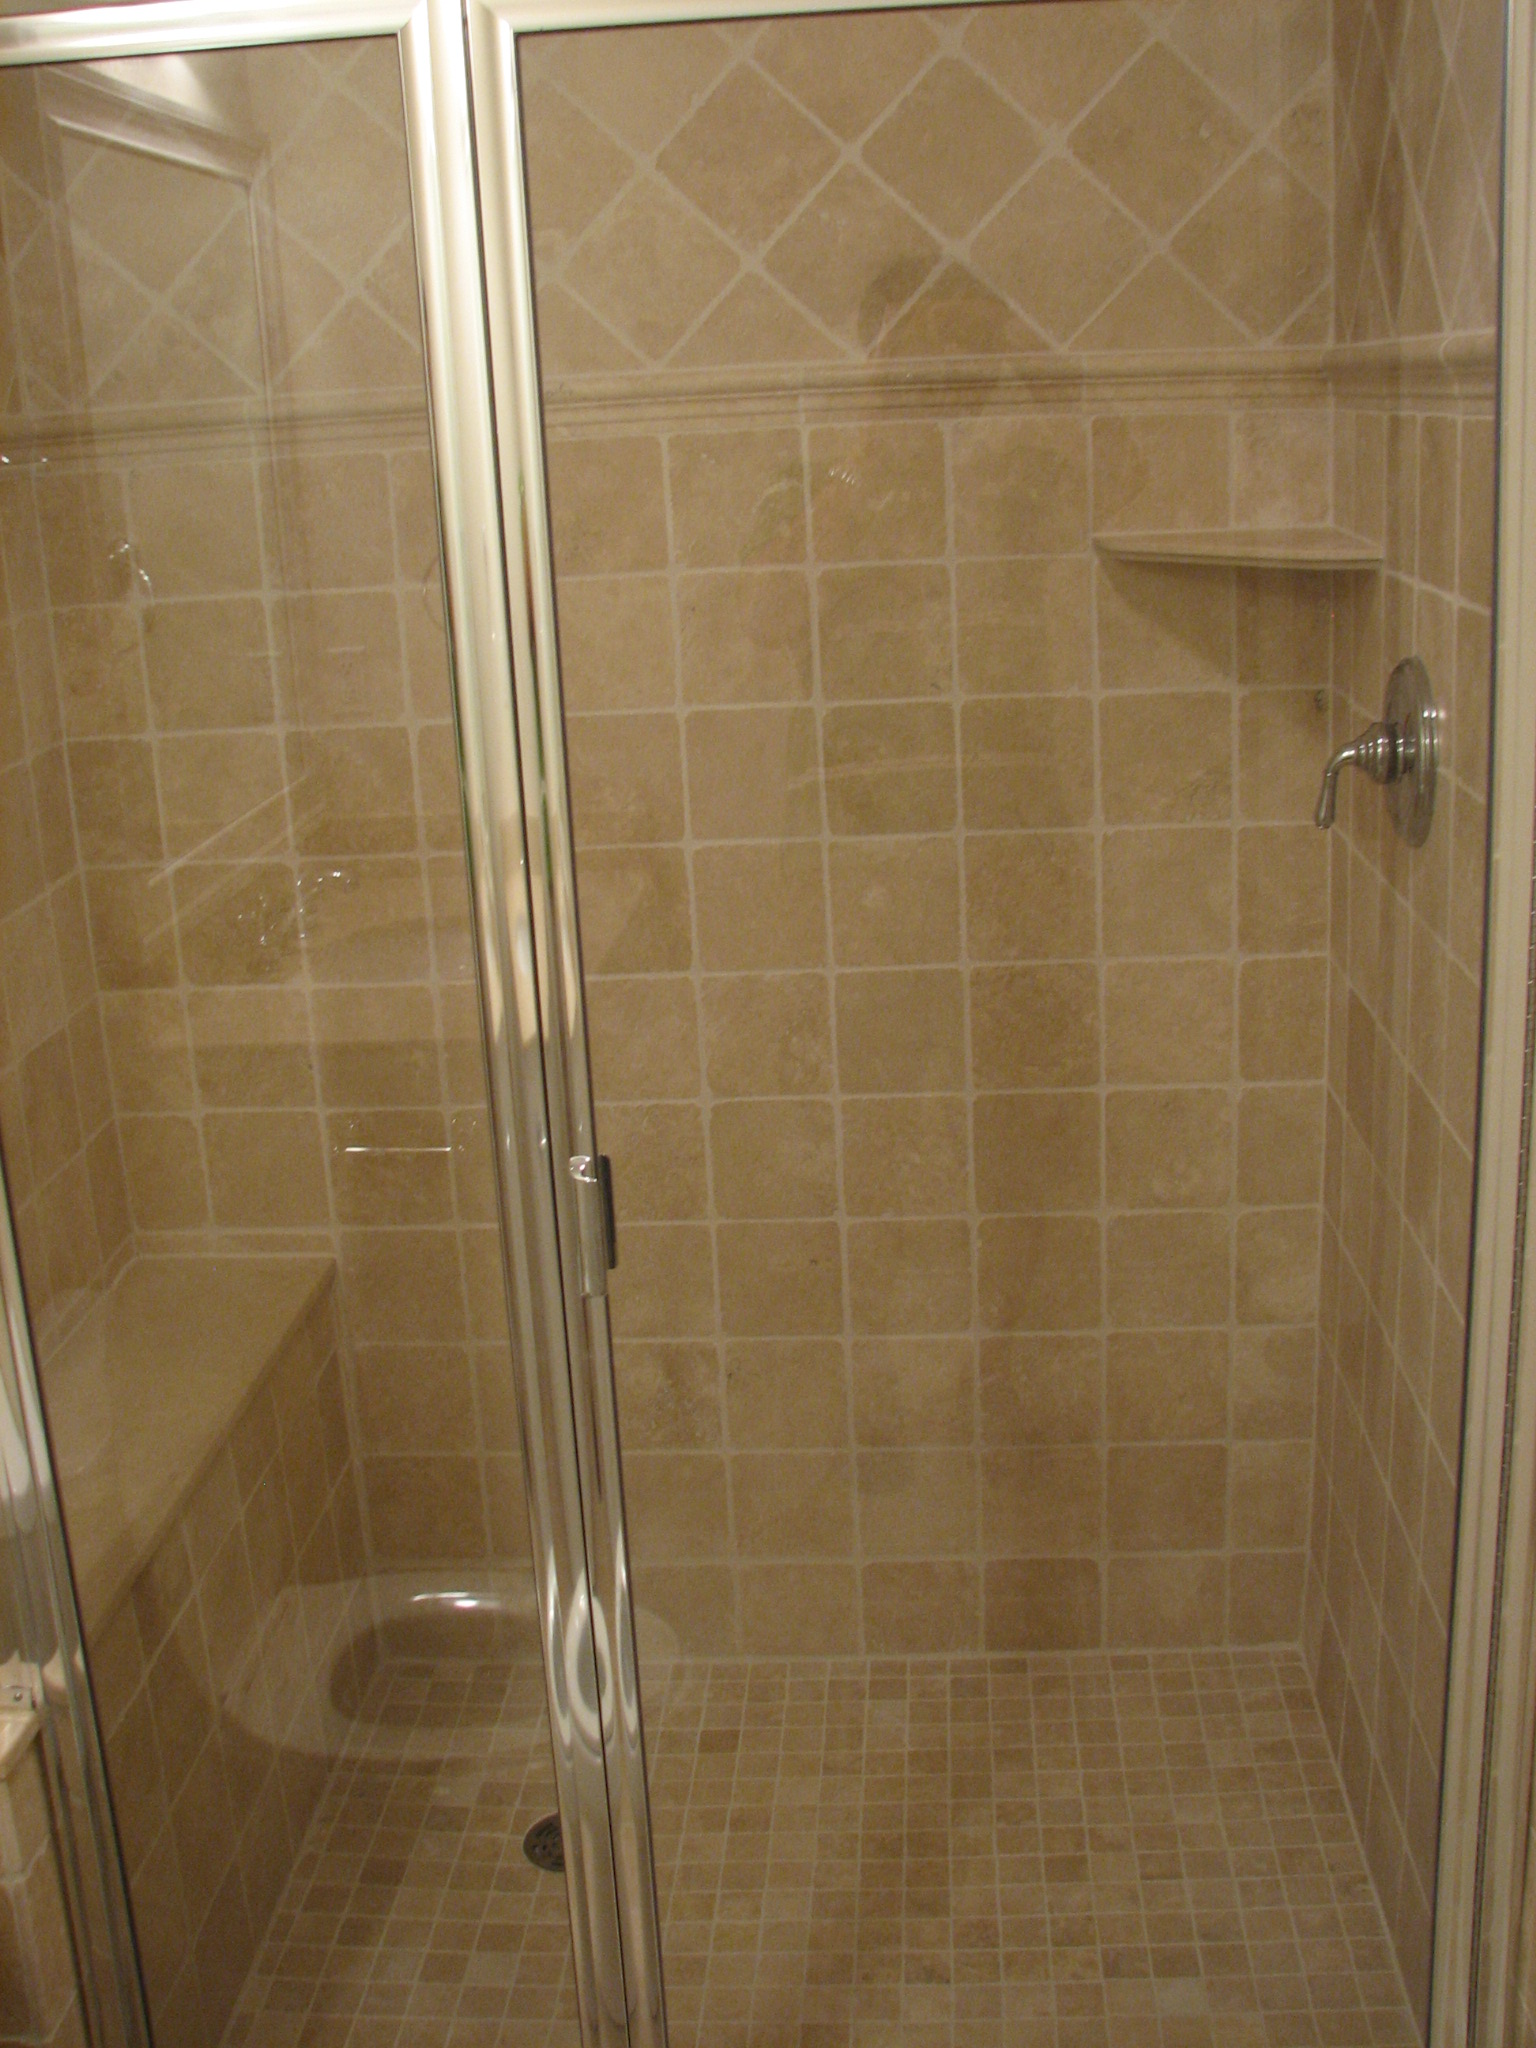 a glass shower door in a tan tiled bathroom